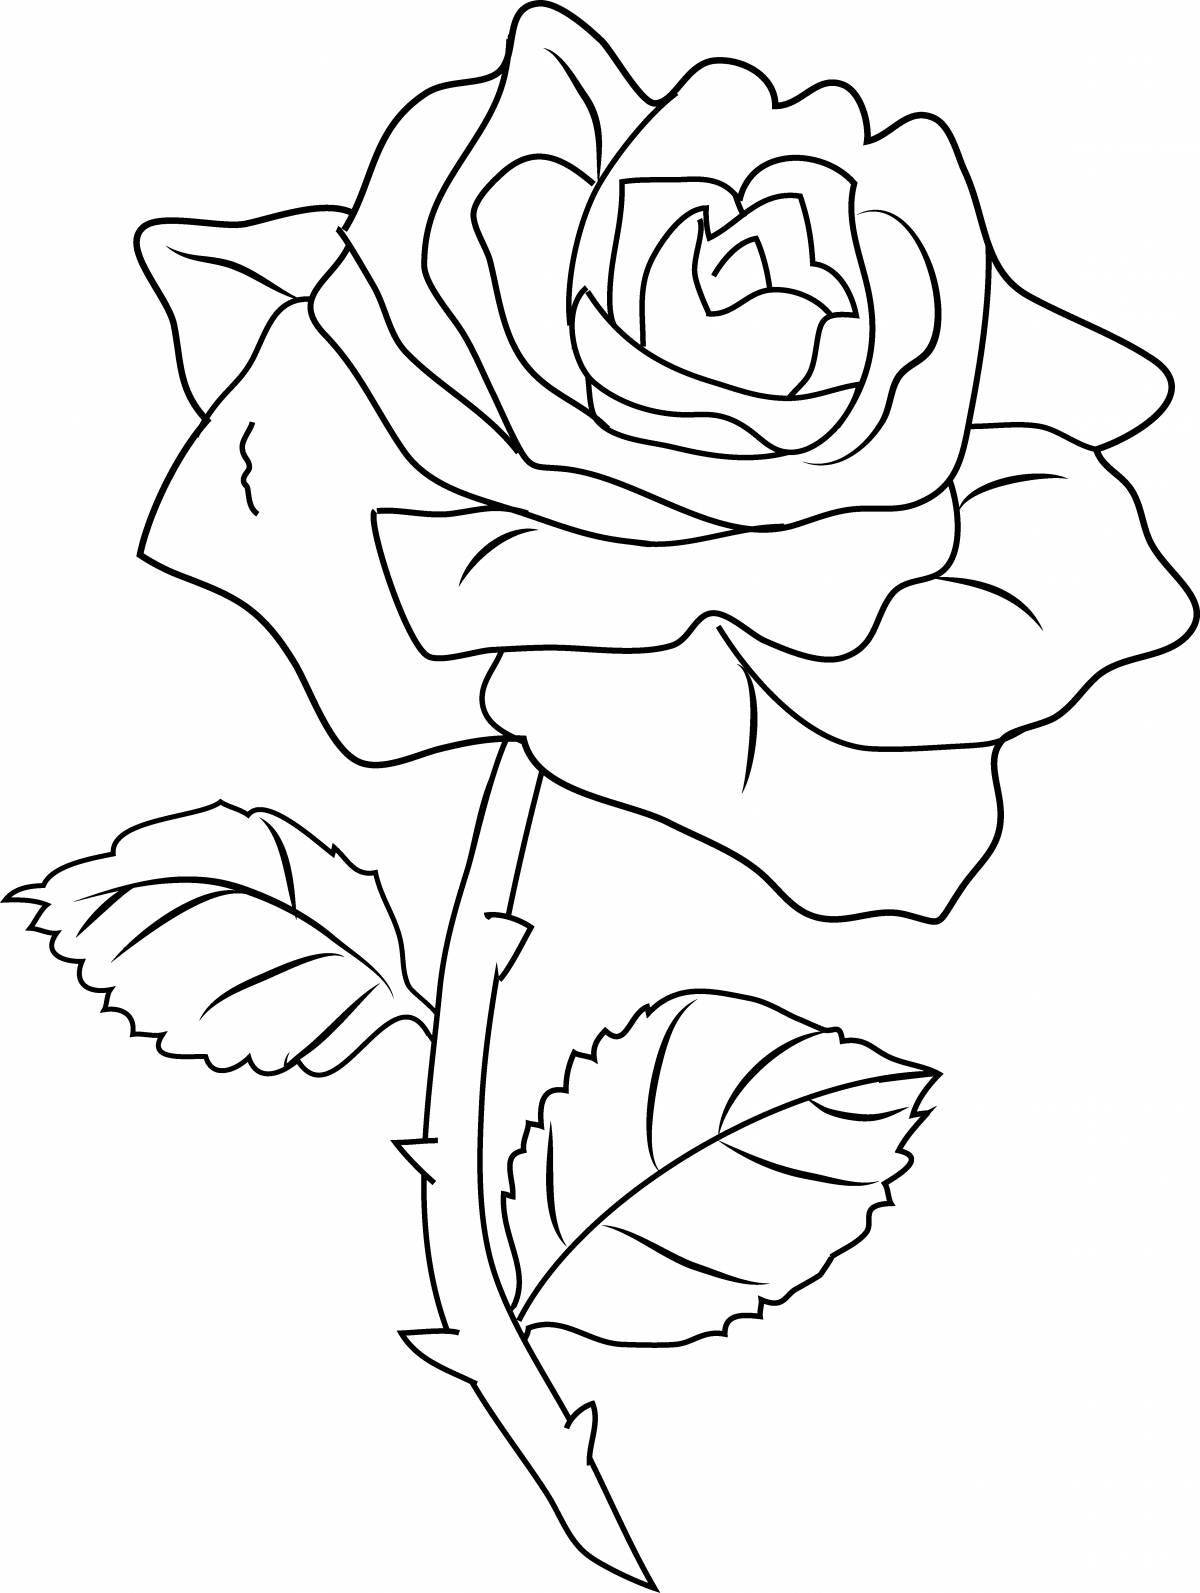 Elegant rose coloring for girls